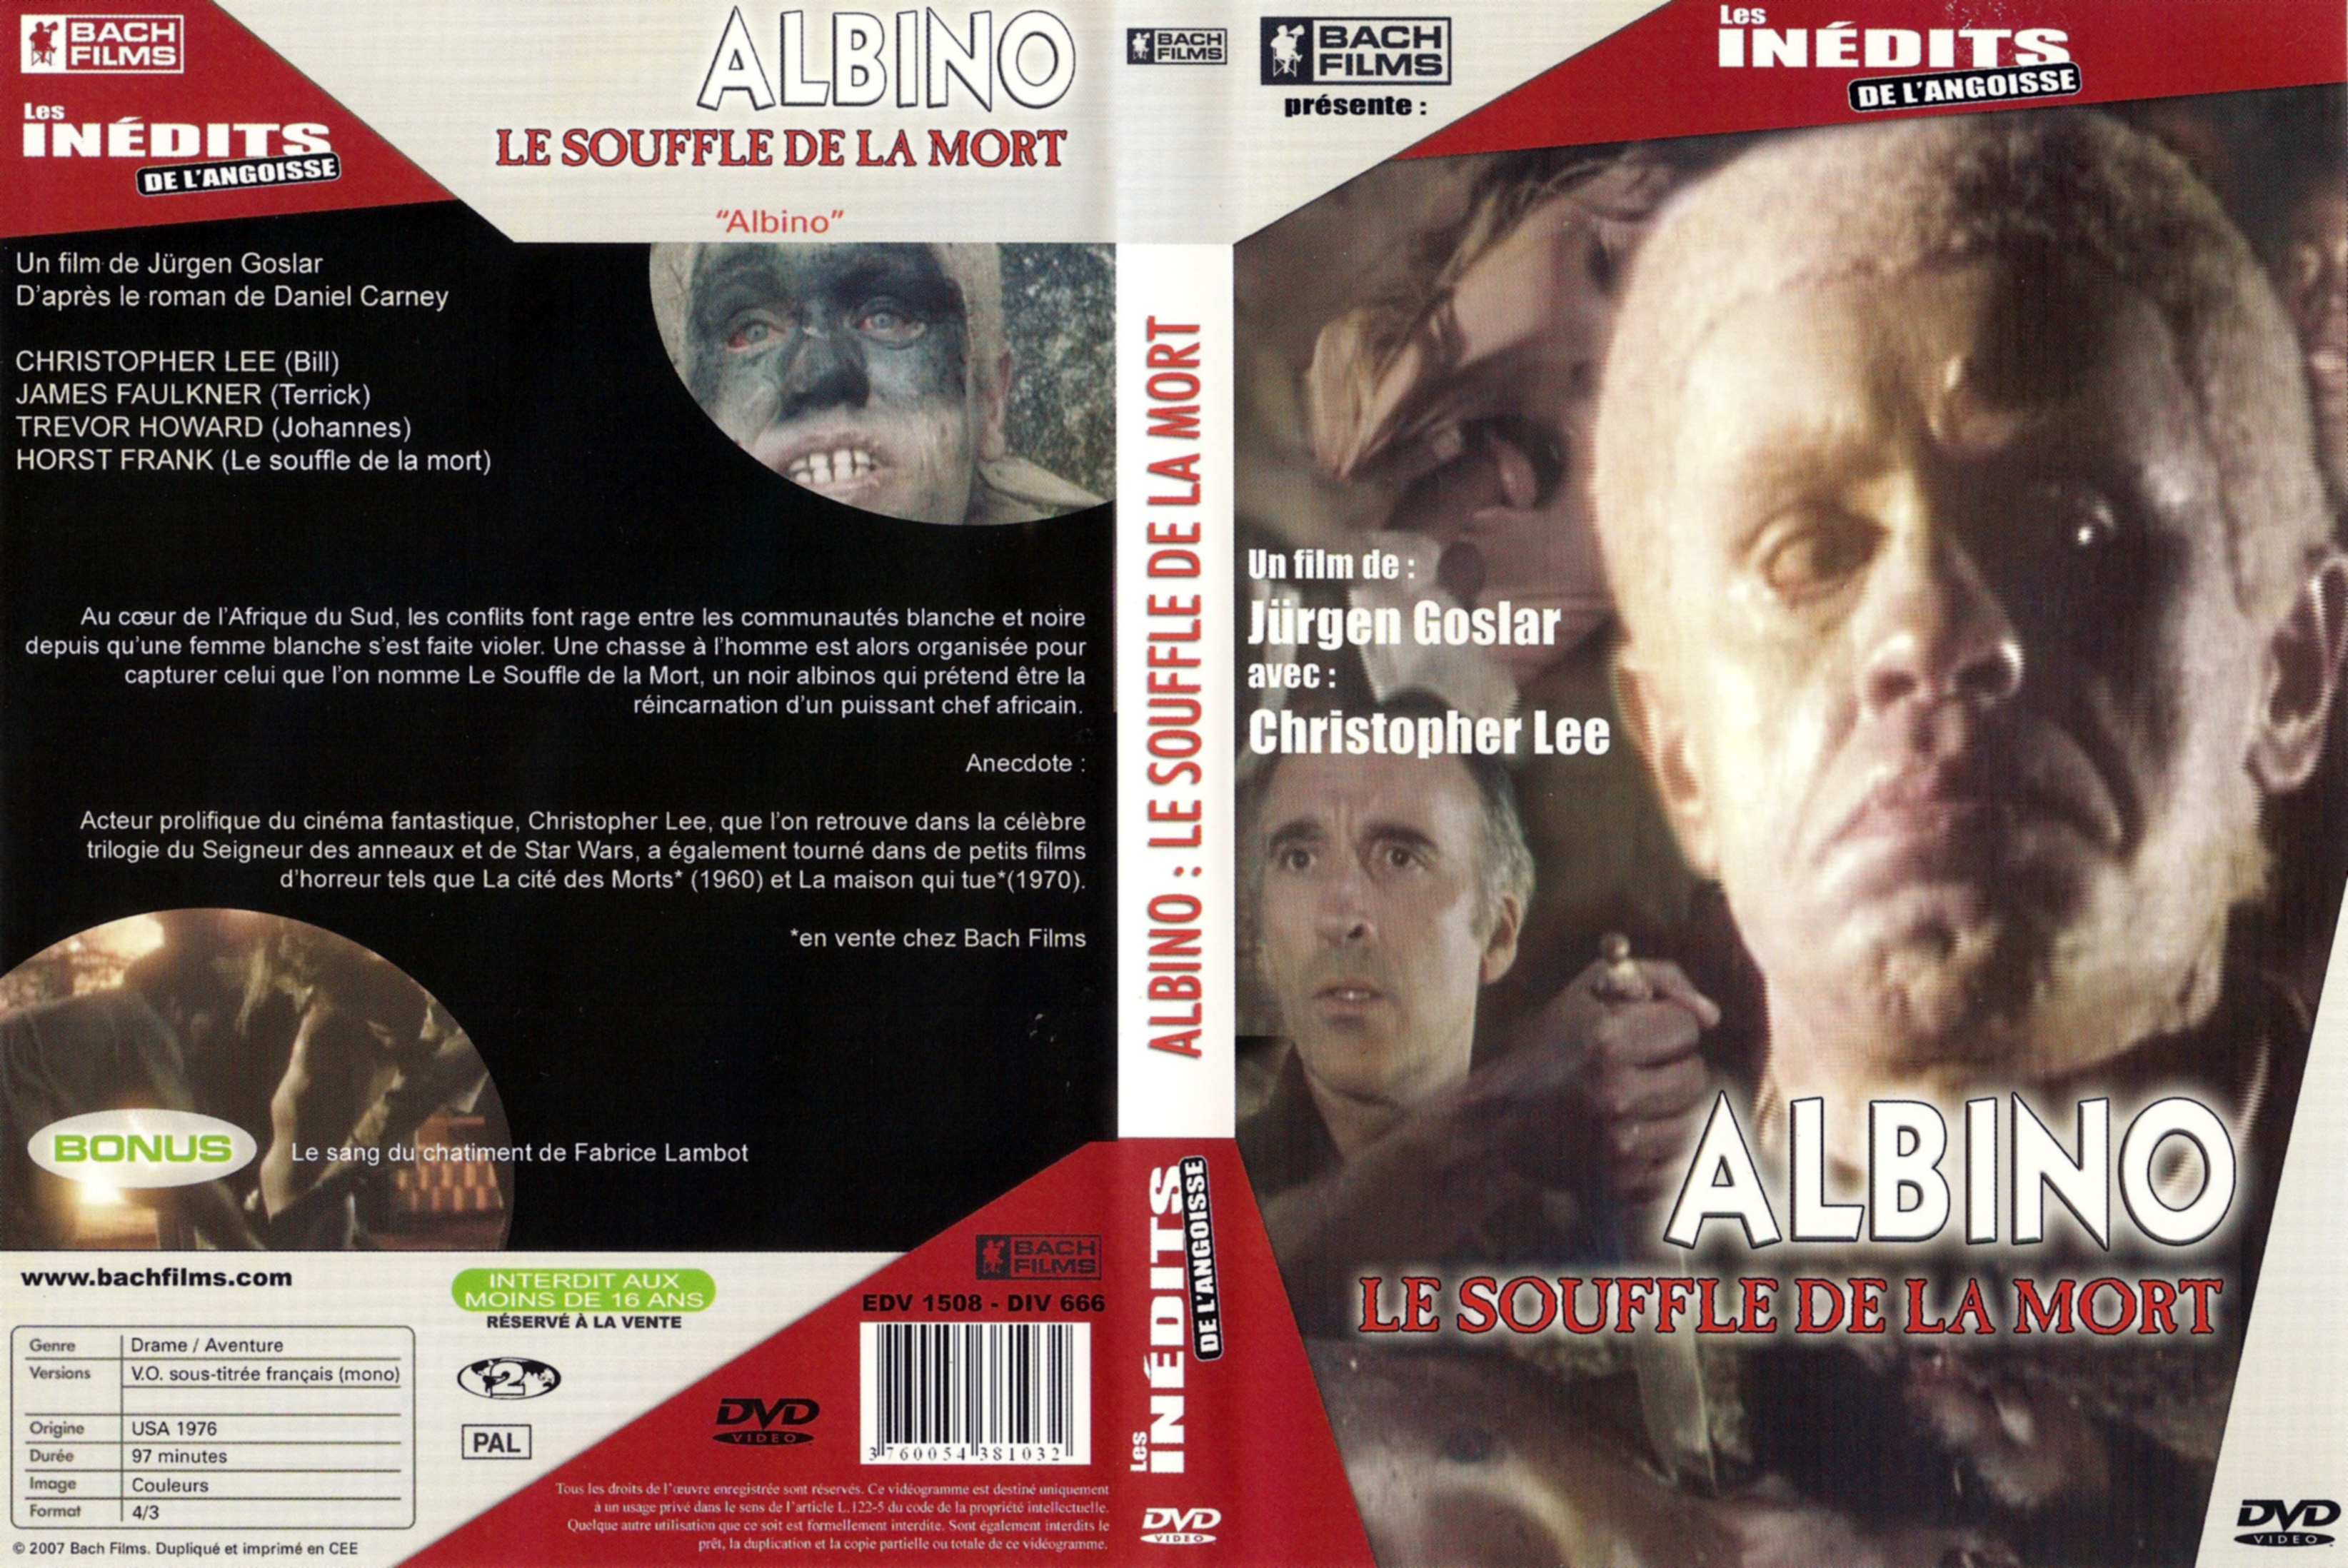 Jaquette DVD Albino le souffle de la mort